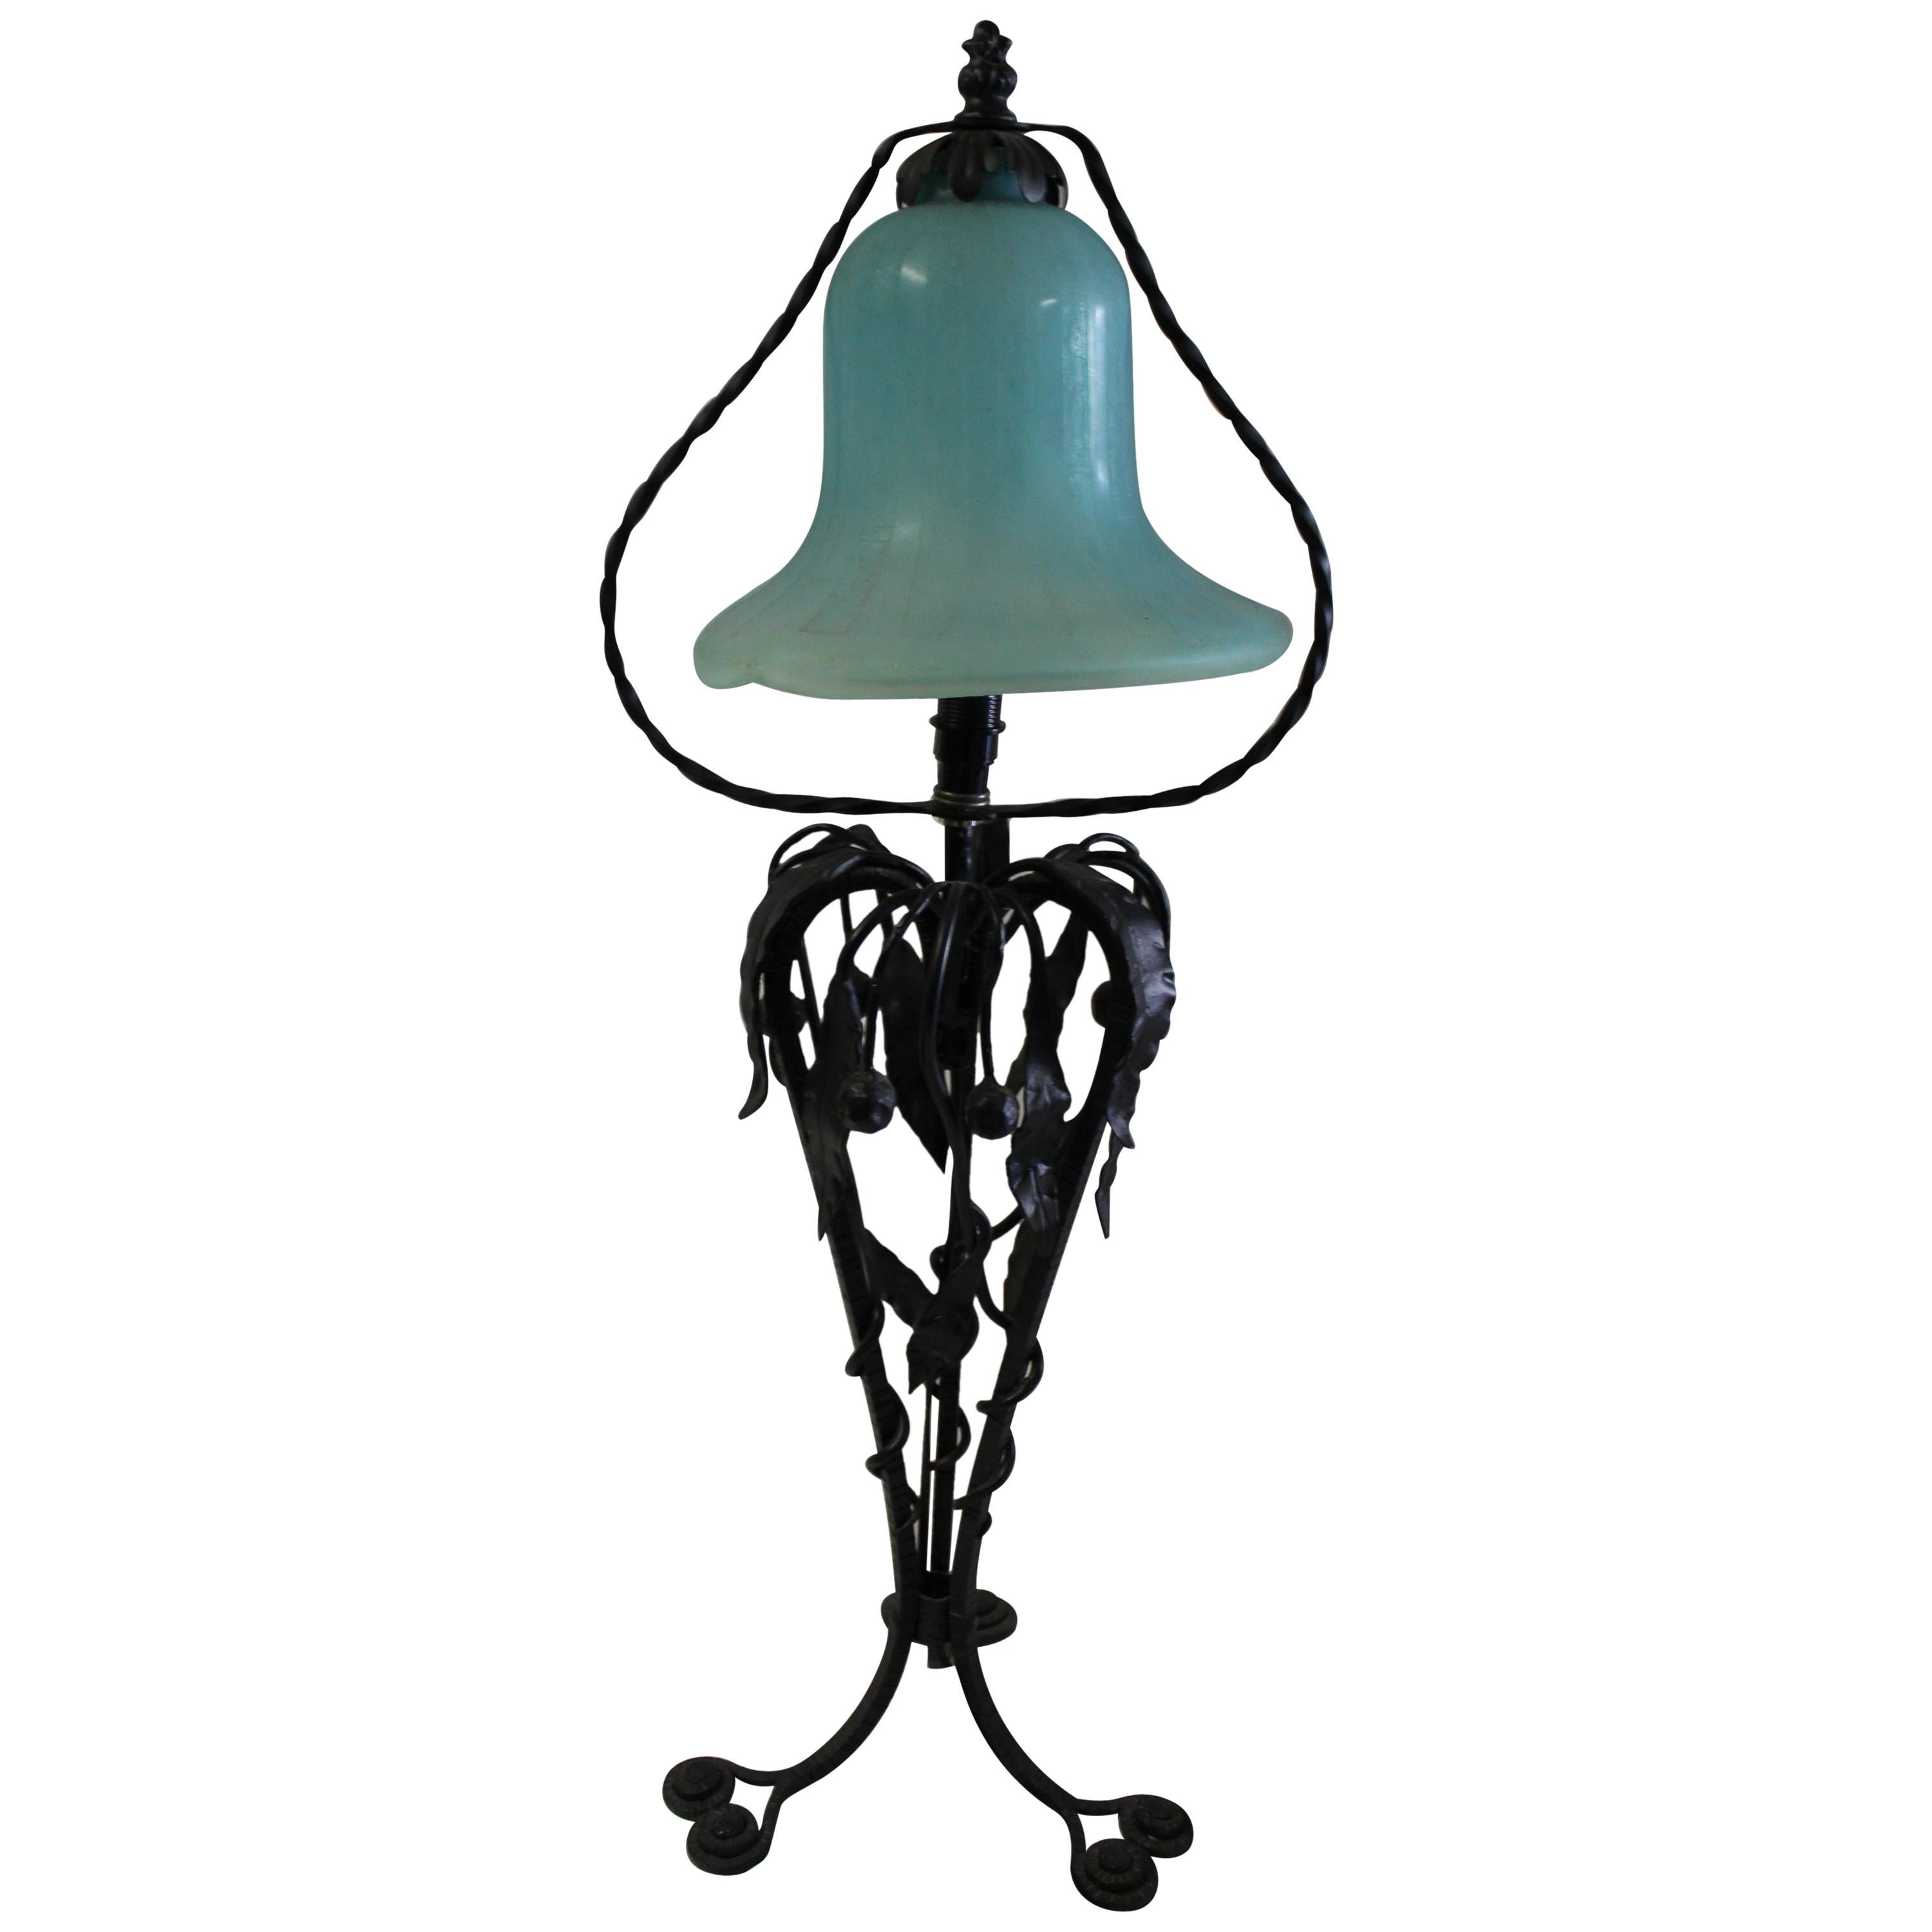 Art Nouveau Table Lamp , Art glass shade  Wrought iron